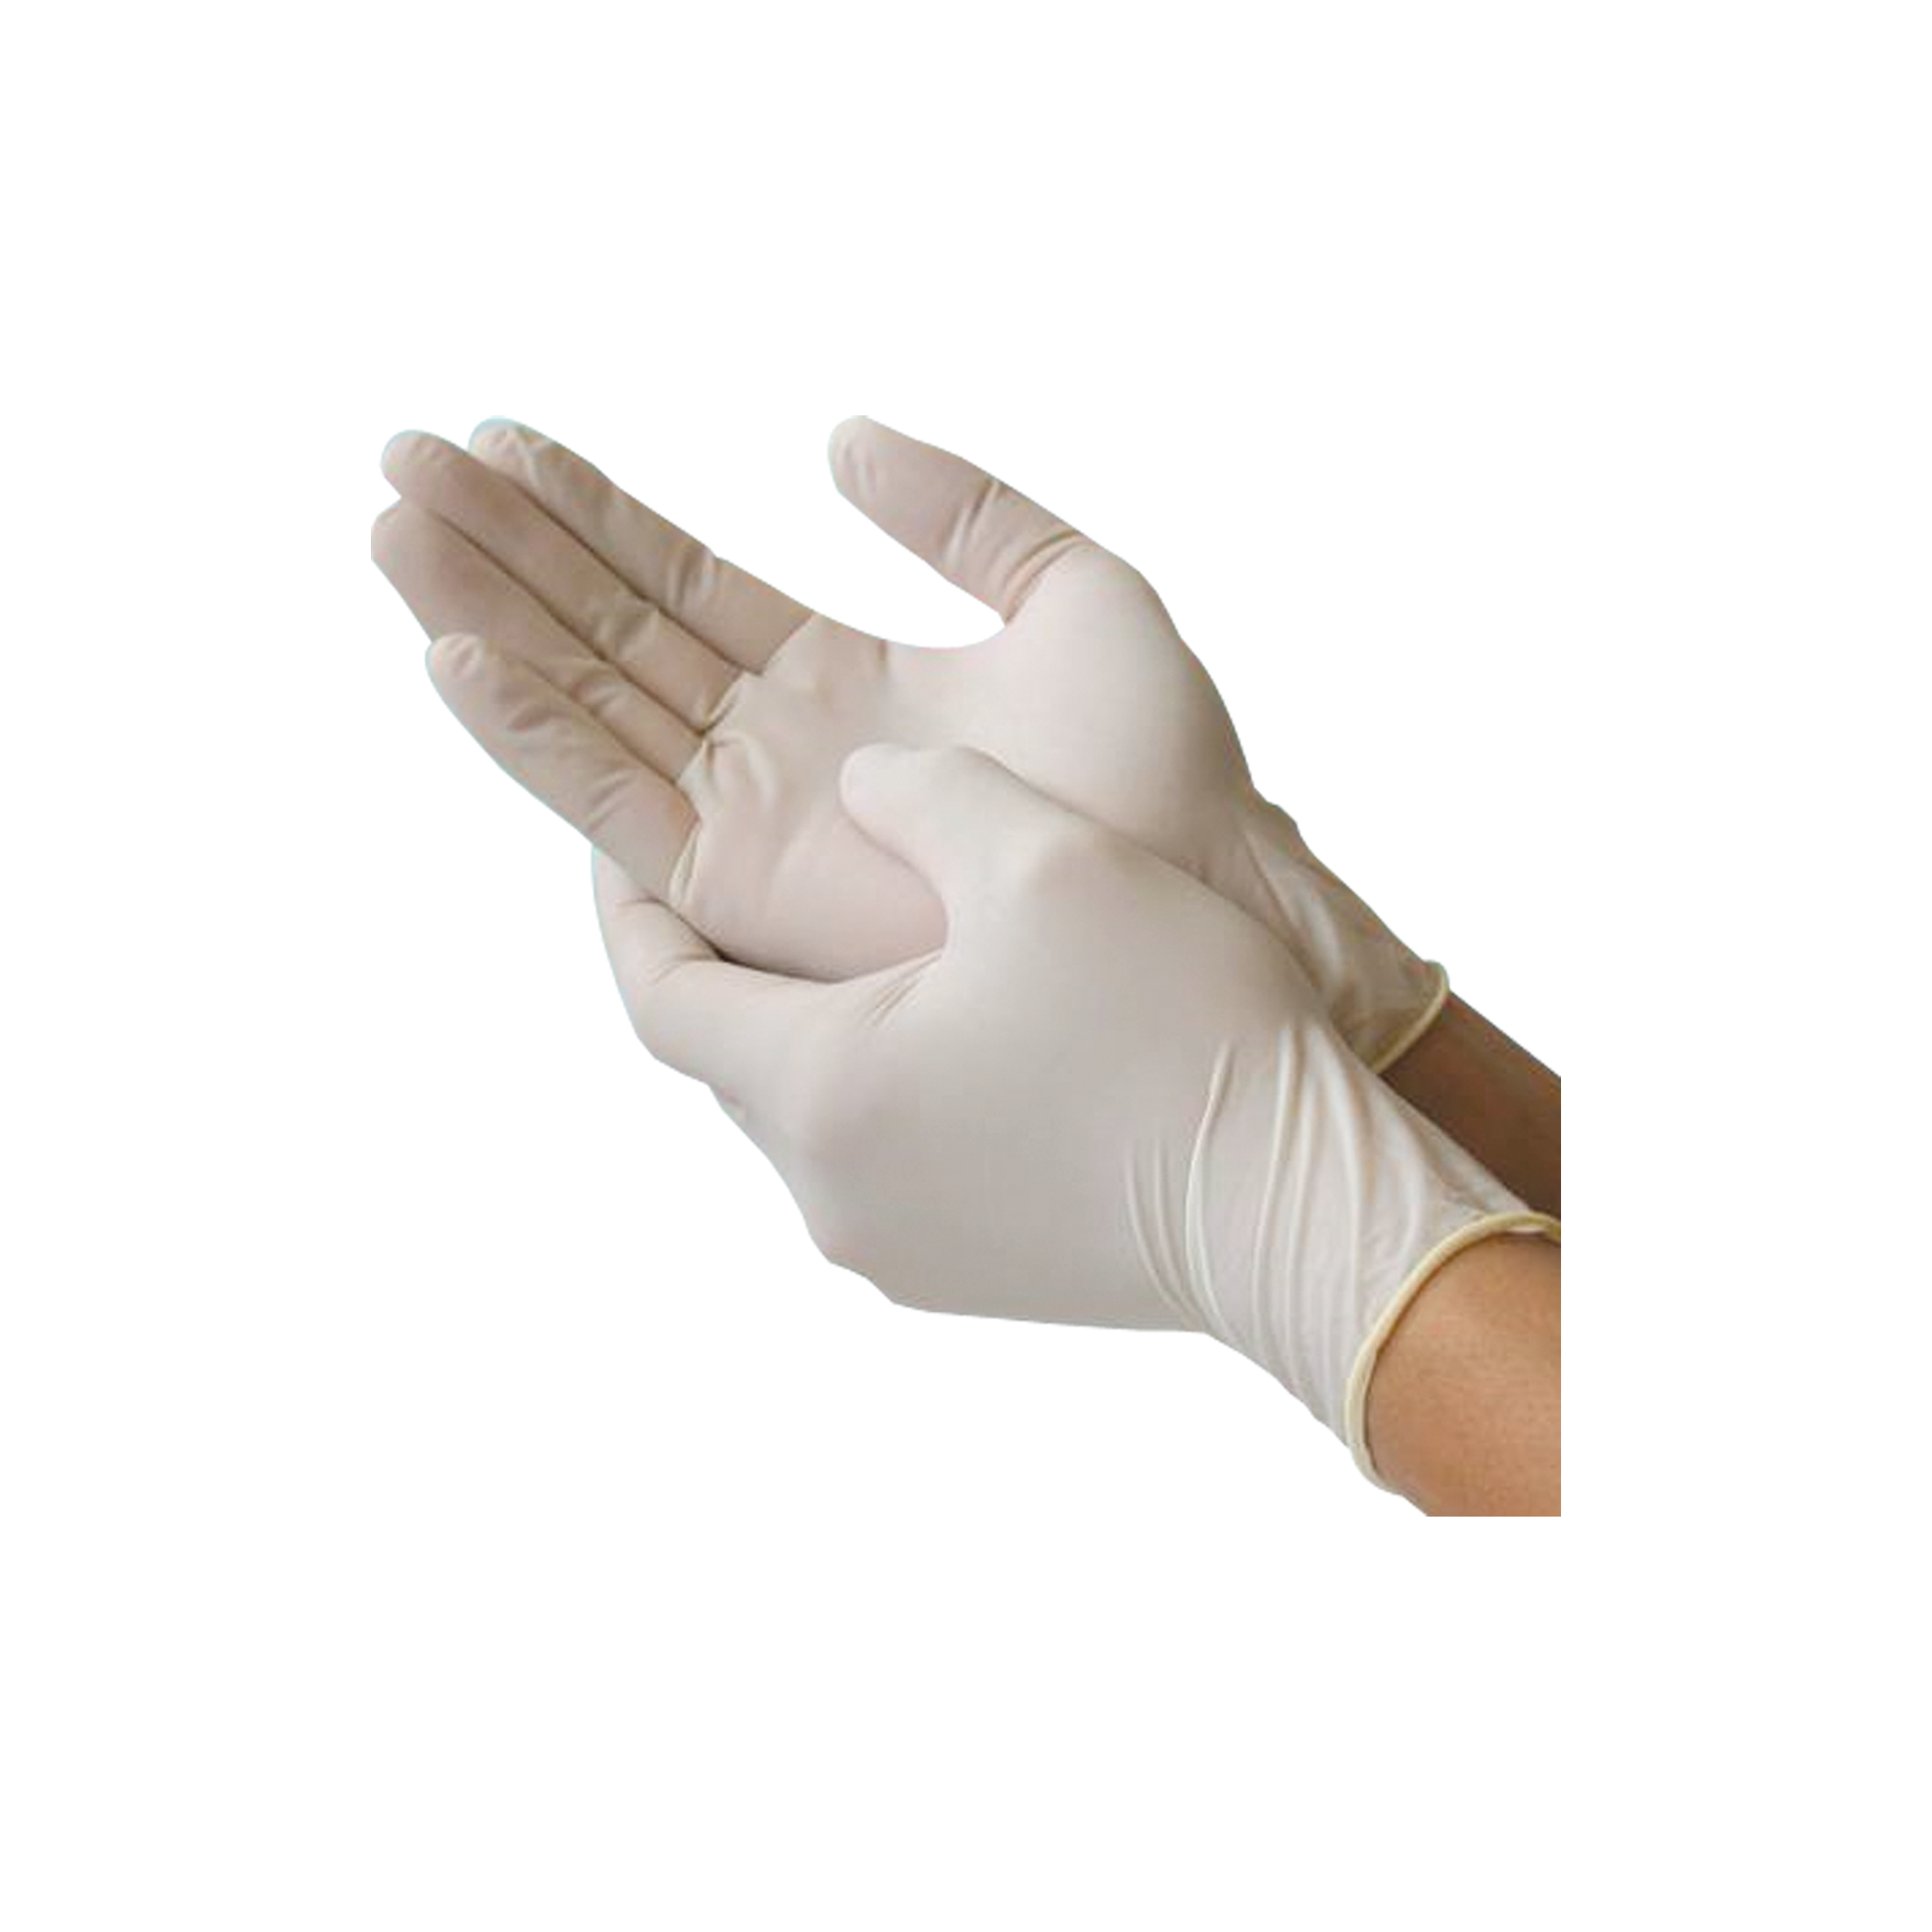 Gloves Vinyl Powder Free Medium - Pack 100 - Case 10